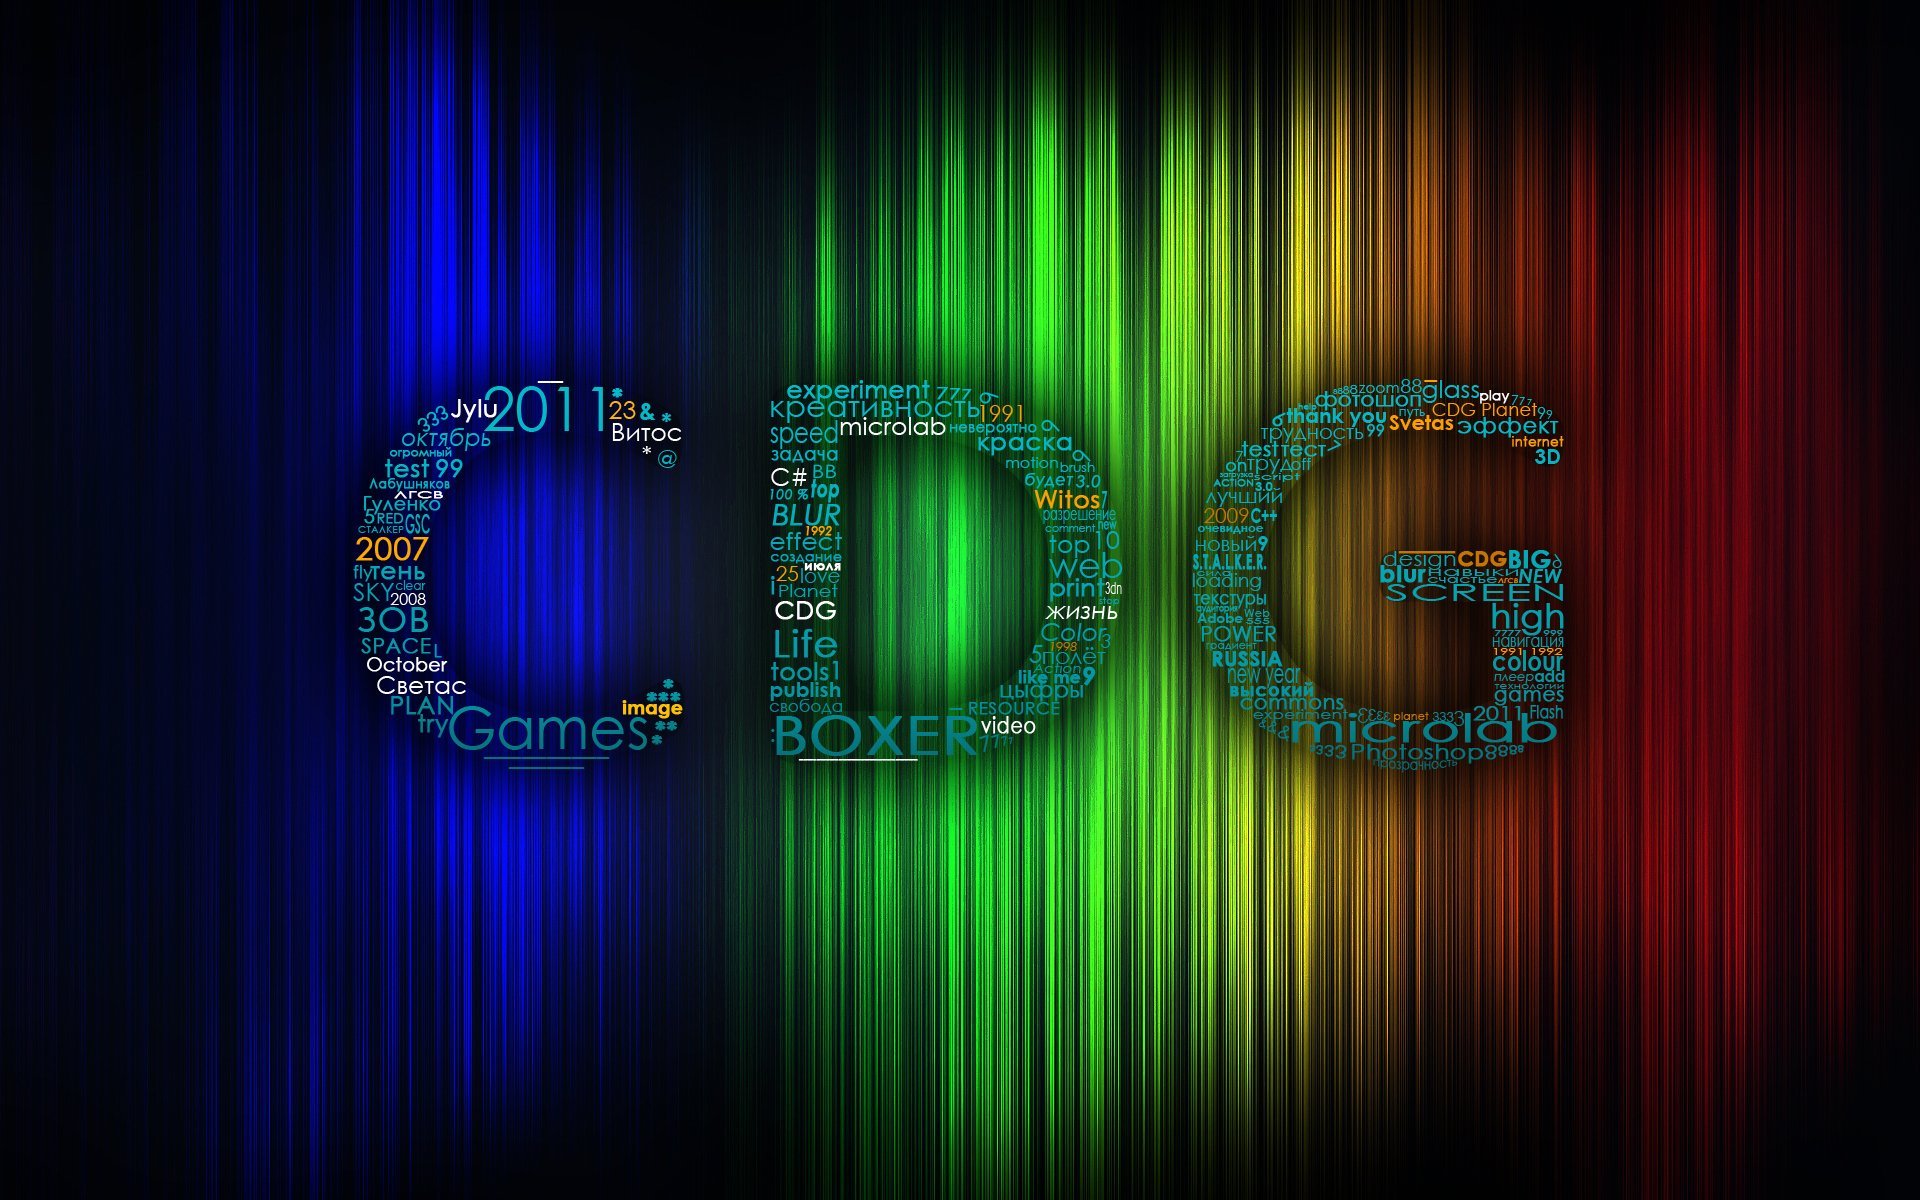 Cdg Pla Games Design The Pany Boxer Microlab HD Wallpaper